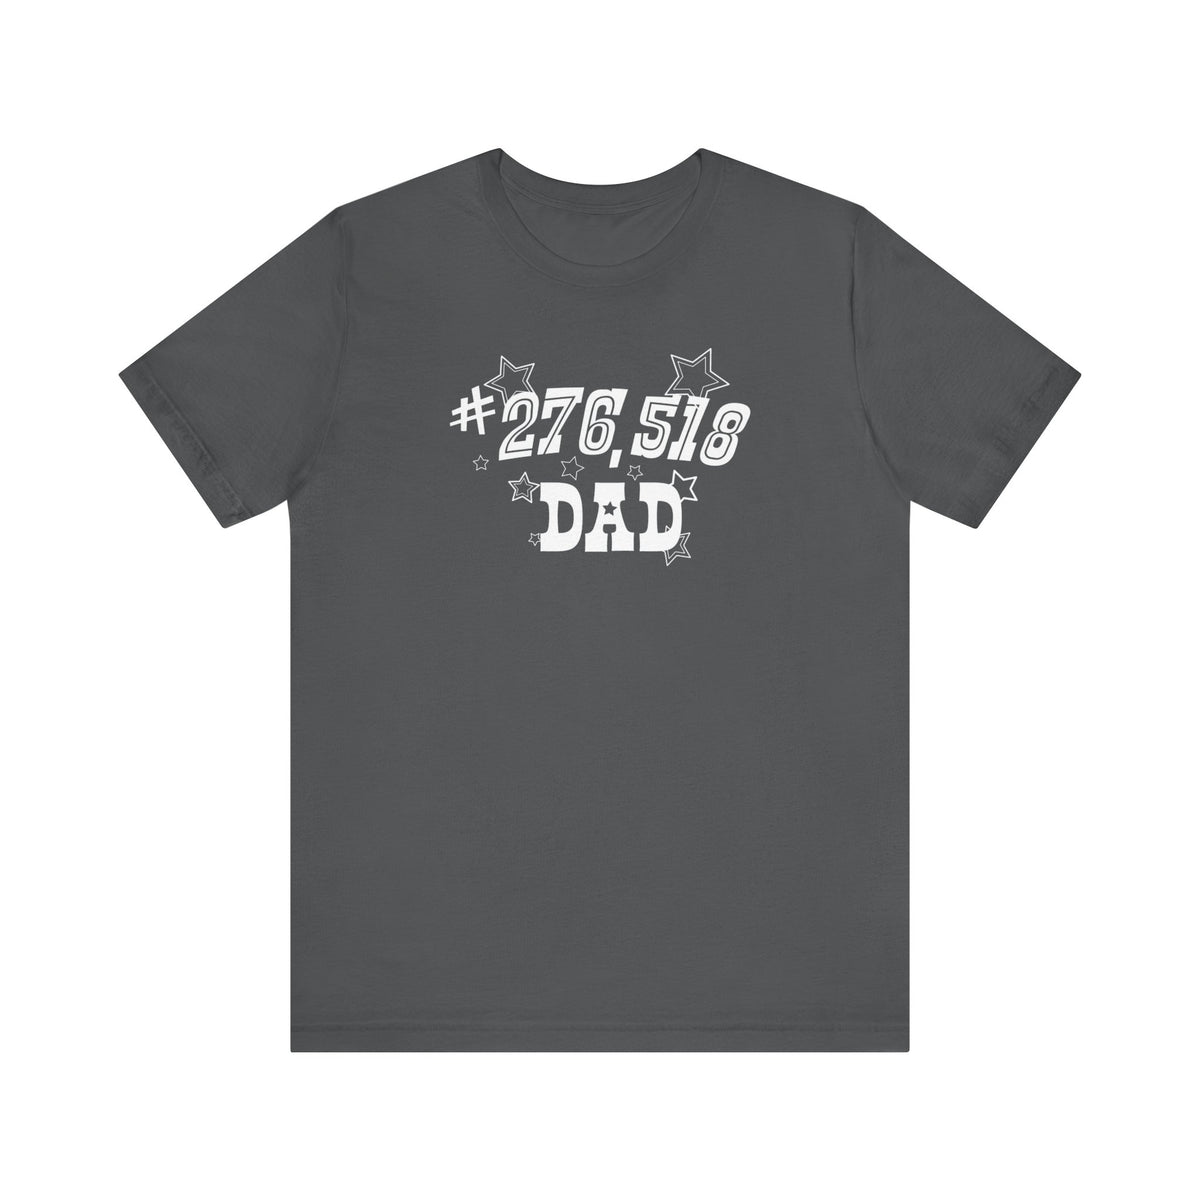 276518 Dad - Men's T-Shirt